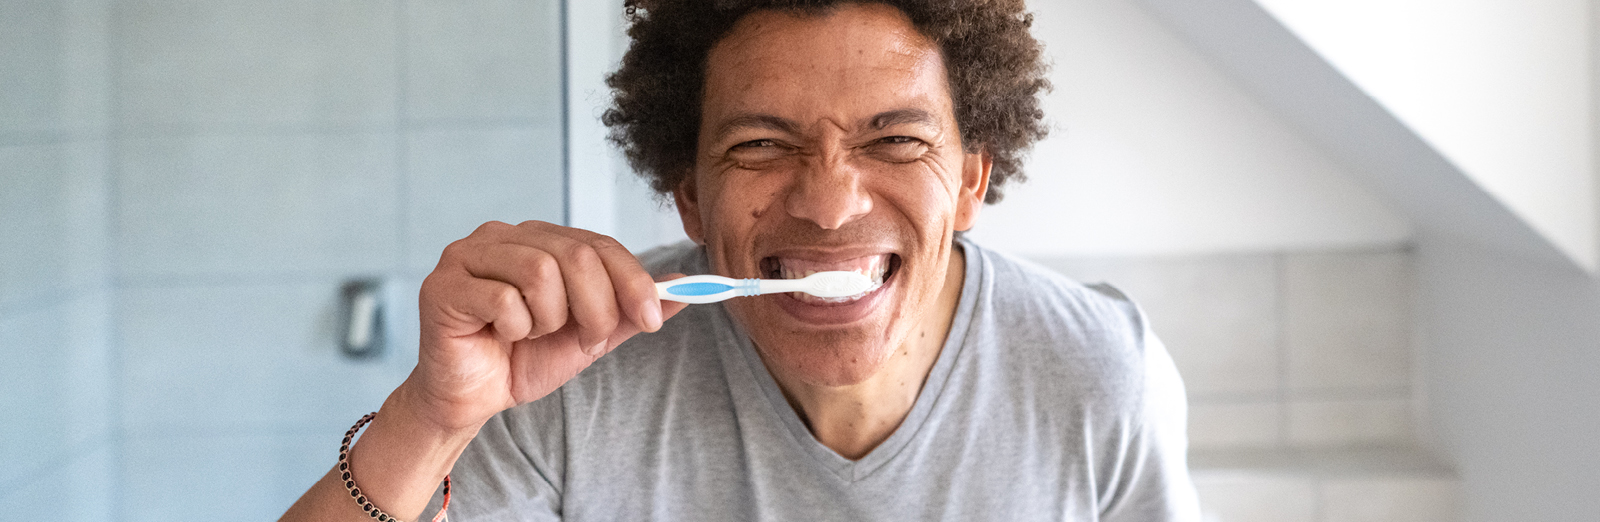 man-brushing-teeth-1600x522.jpg